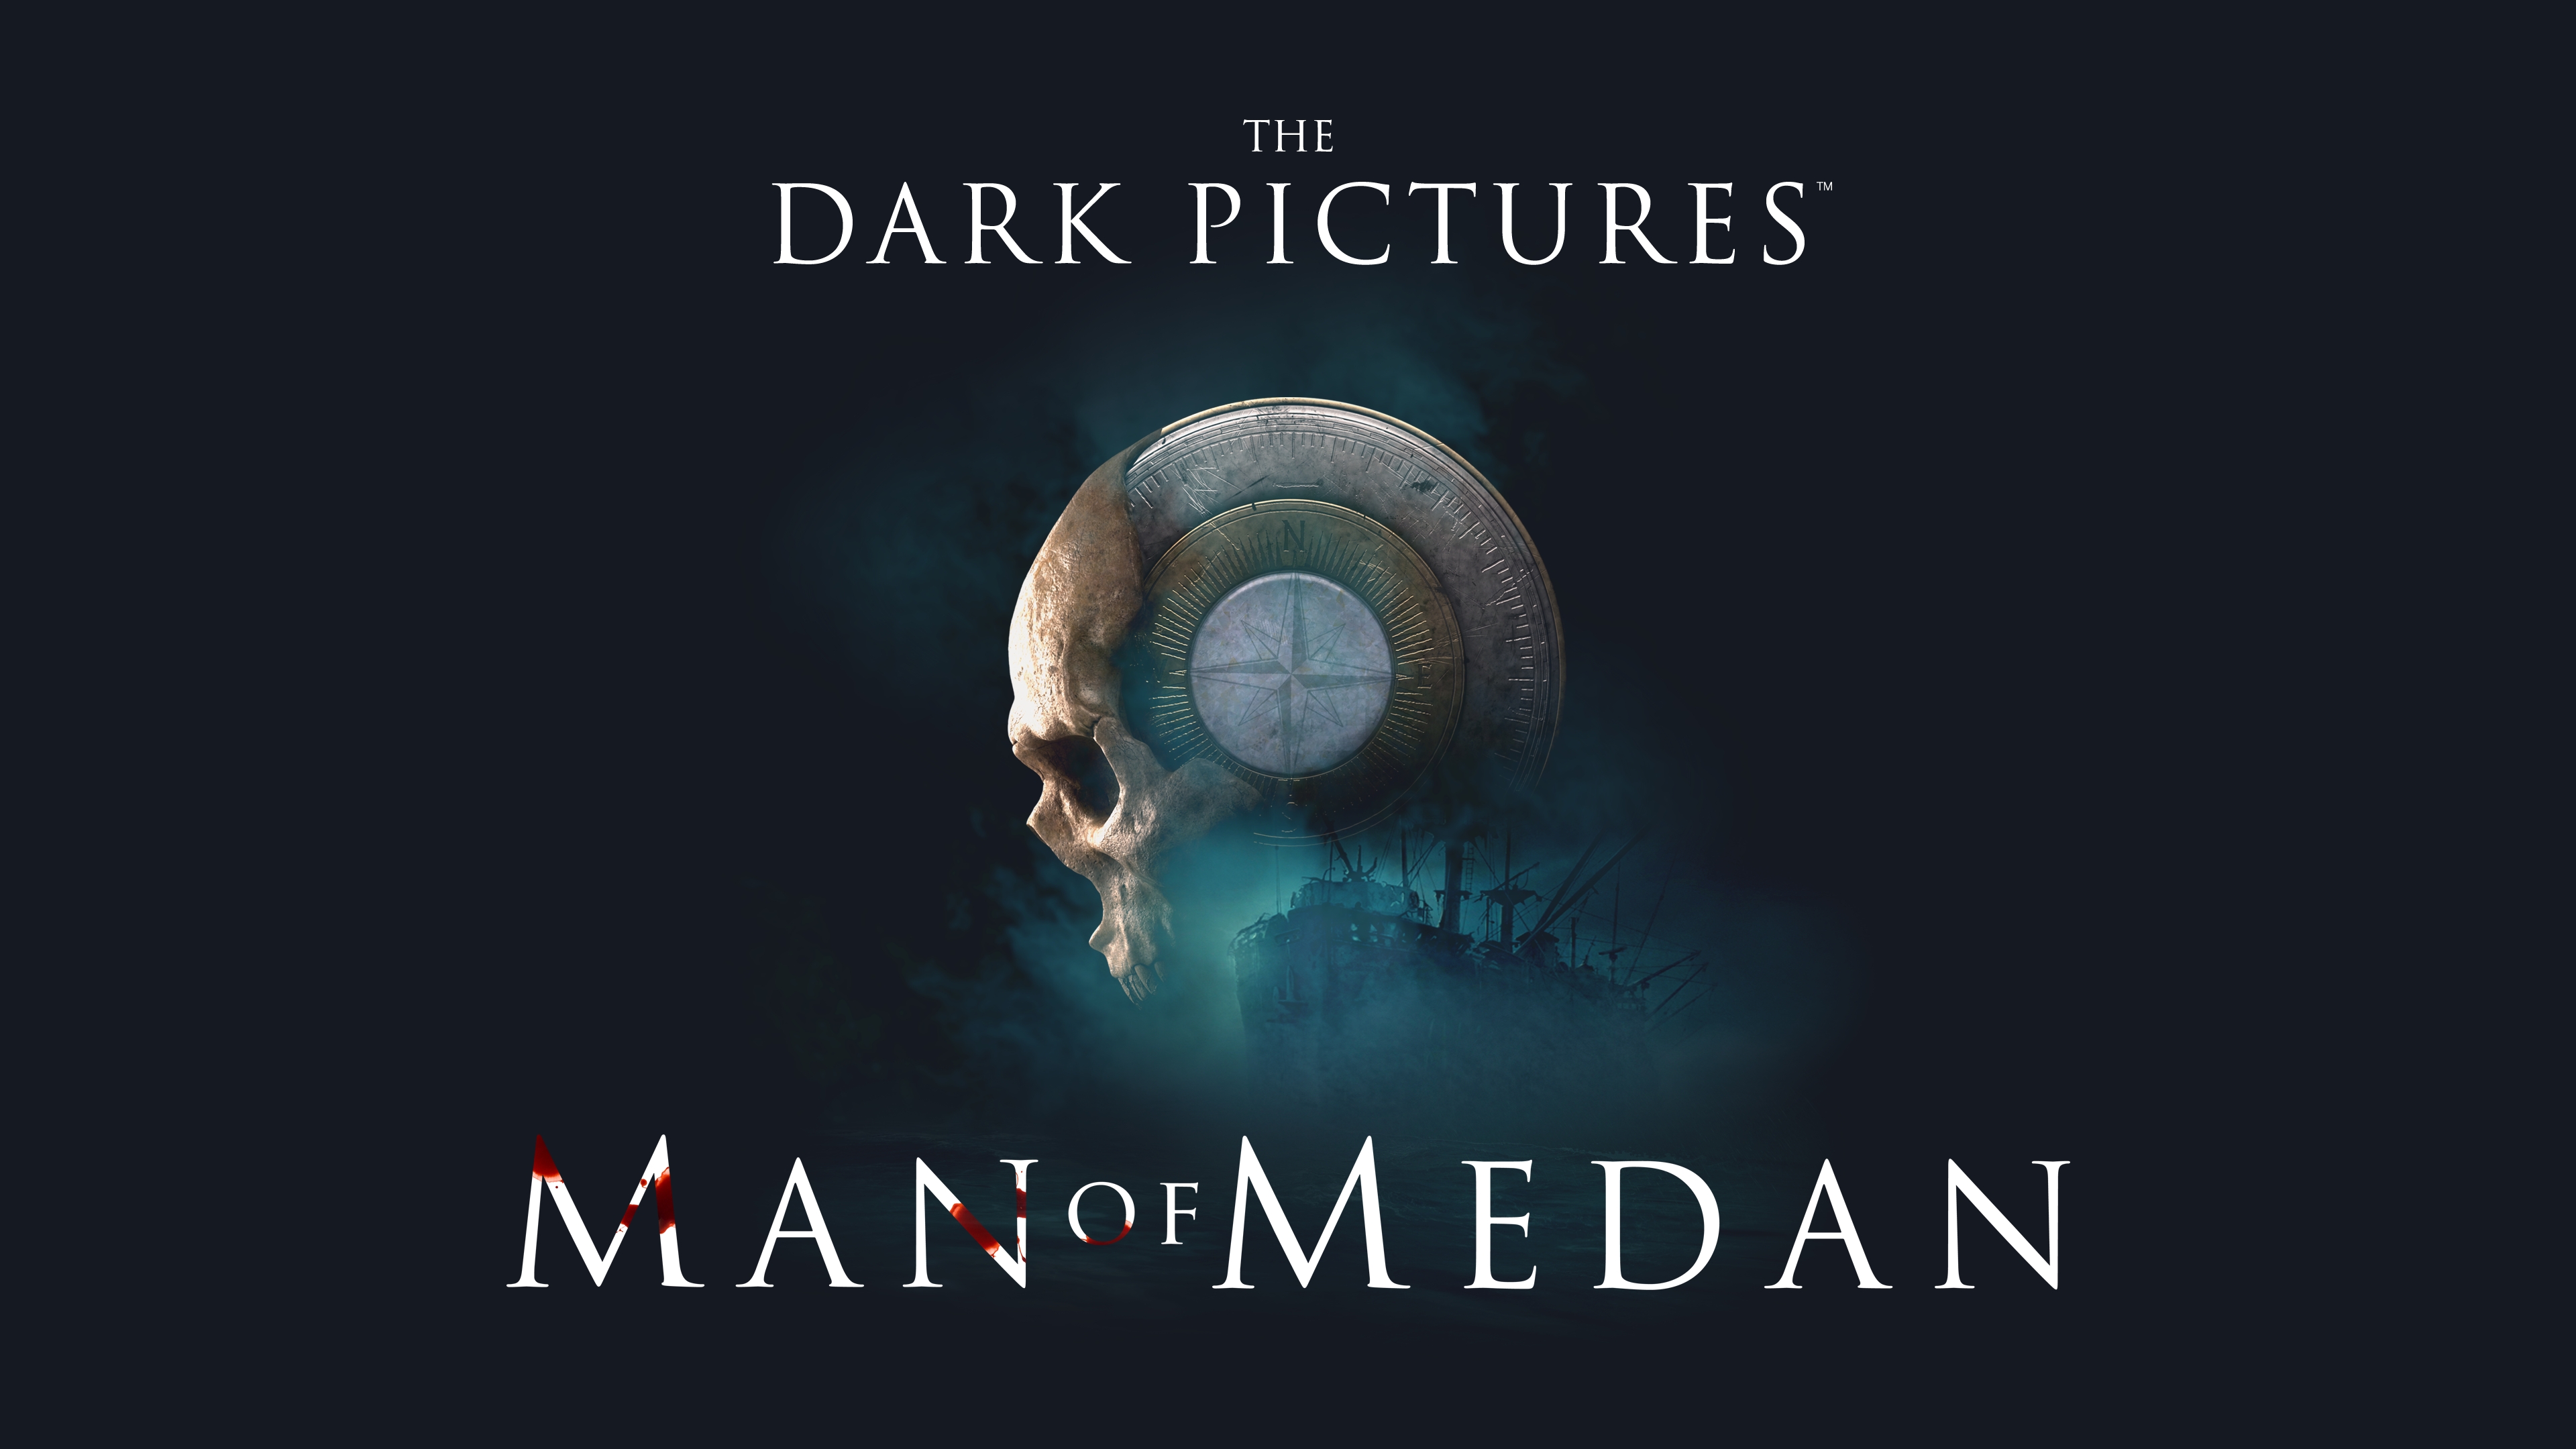 Игра medan the dark. Игра the Dark pictures: man of Medan. The Dark pictures Anthology: man of Medan игра. Дарк Пикчерз игры.